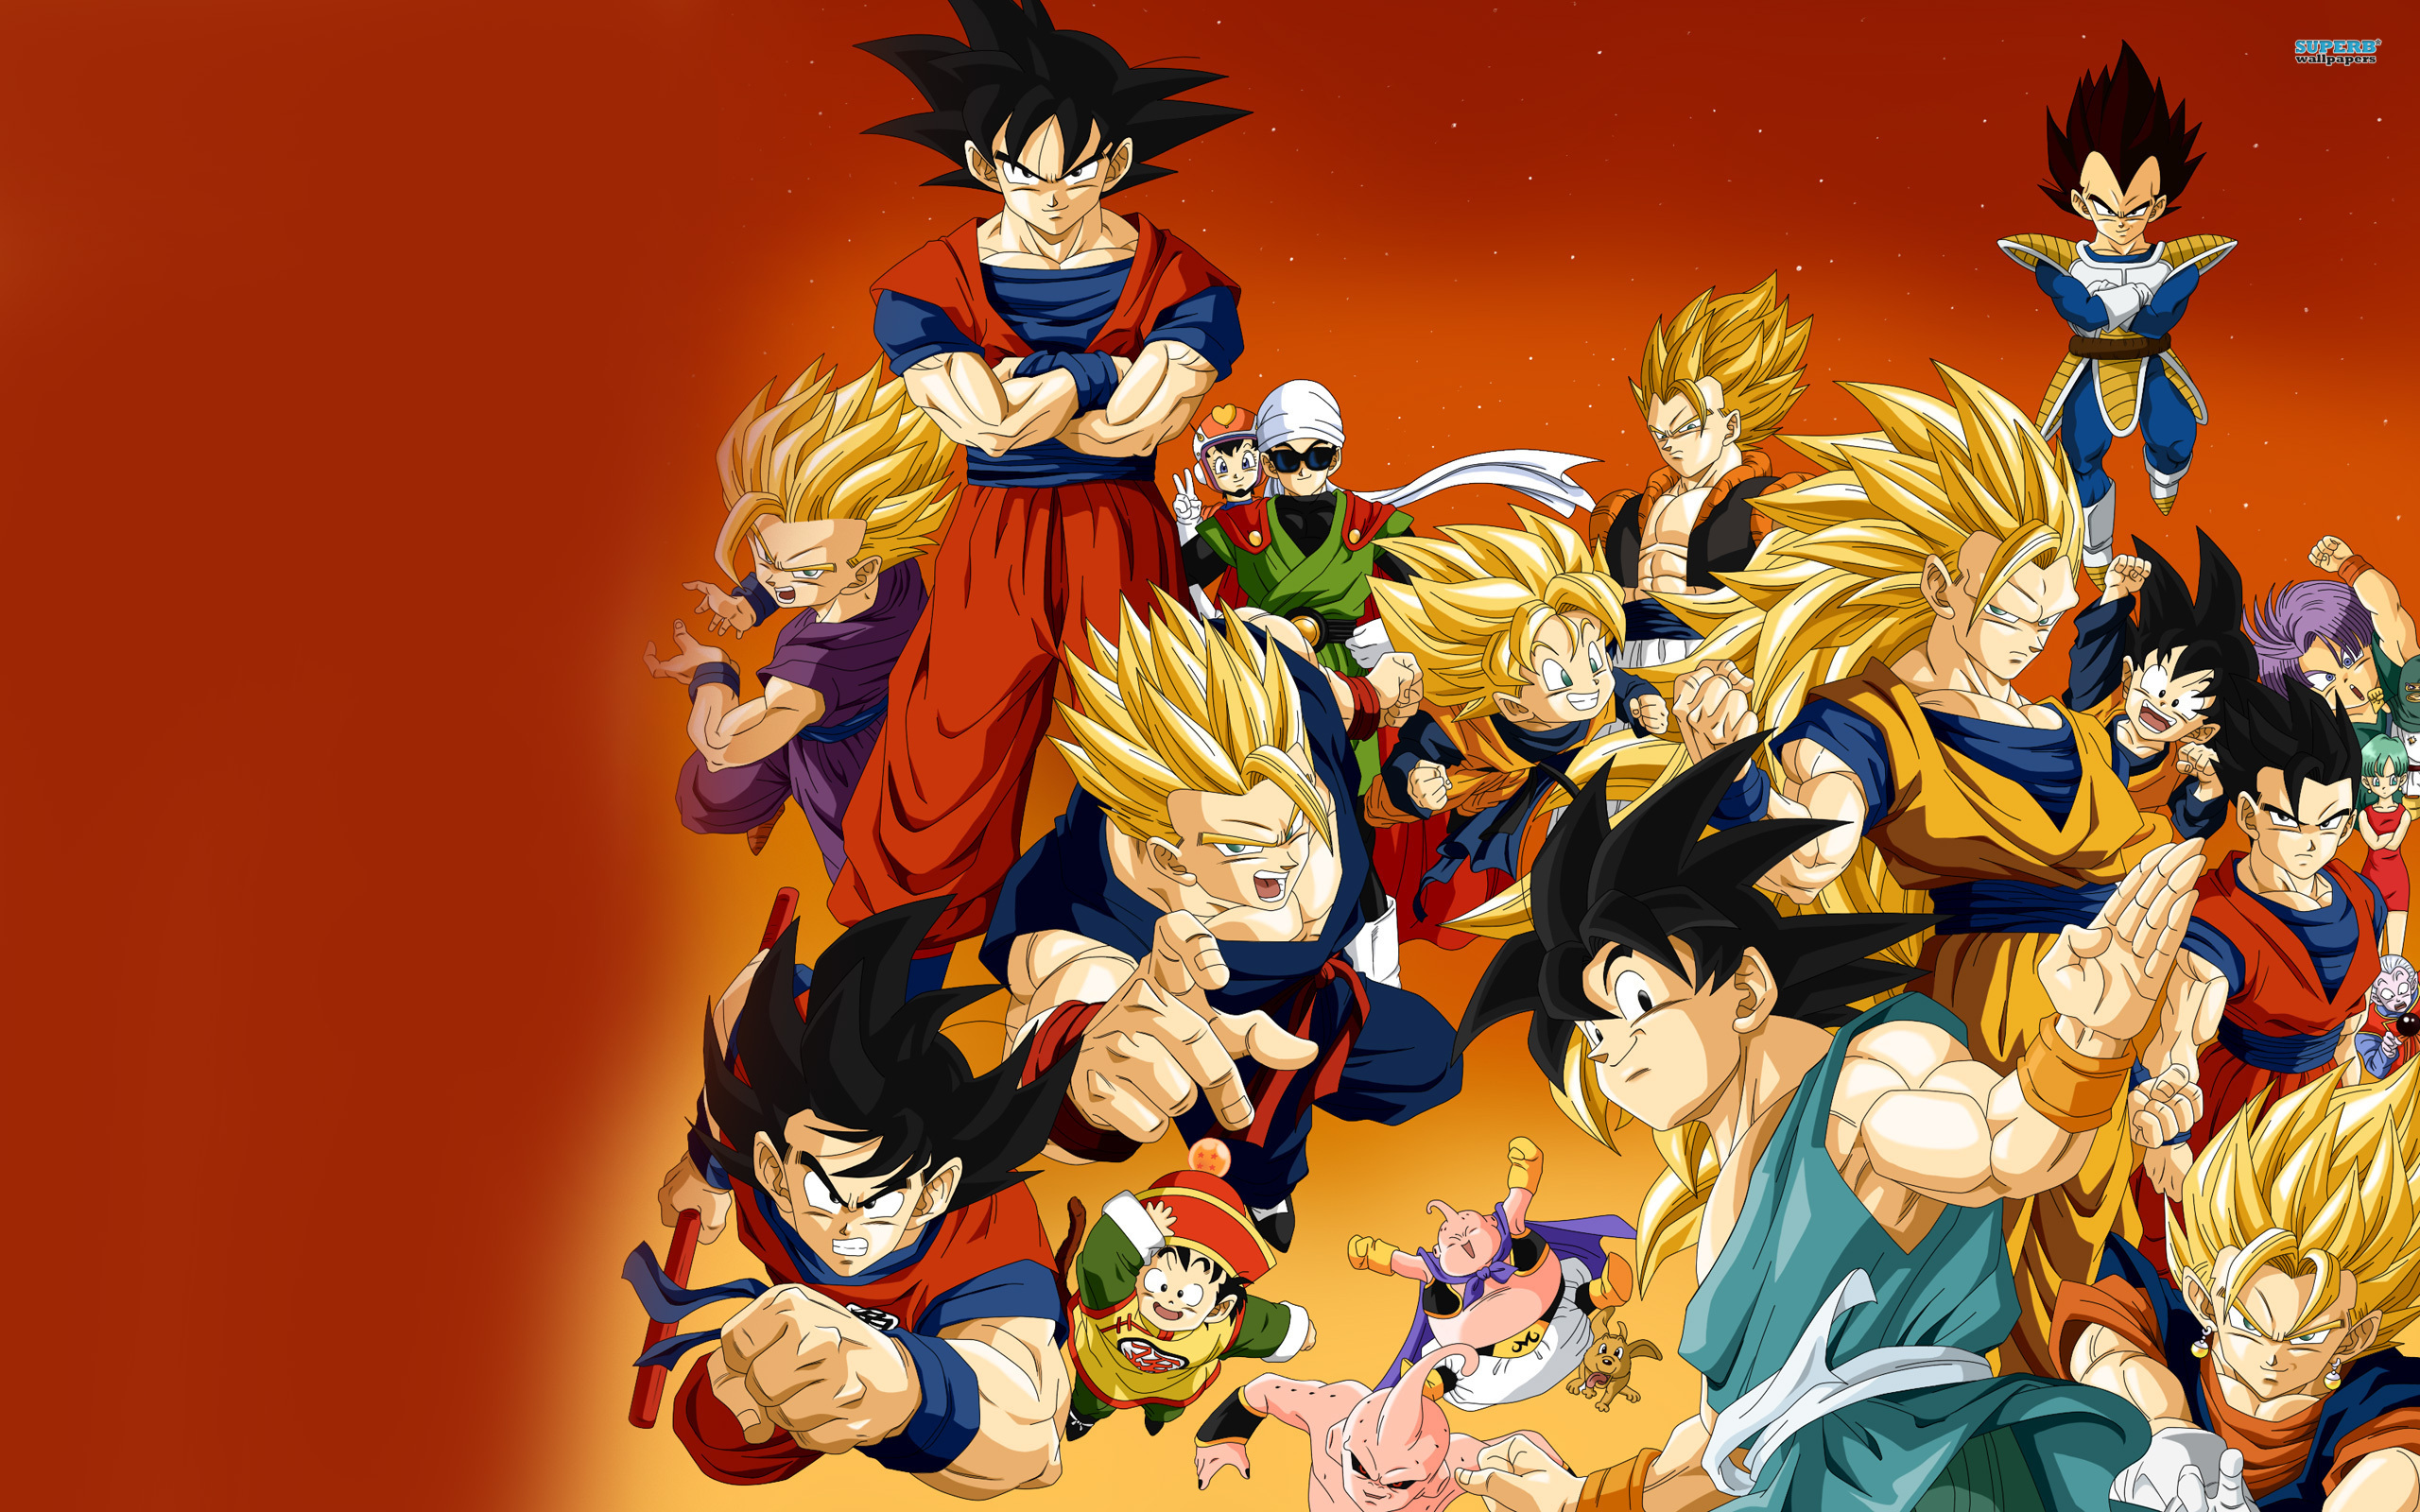 Goku Dragon ball Z4k wallpaper by SHAKIRSAVAGE123 - Download on